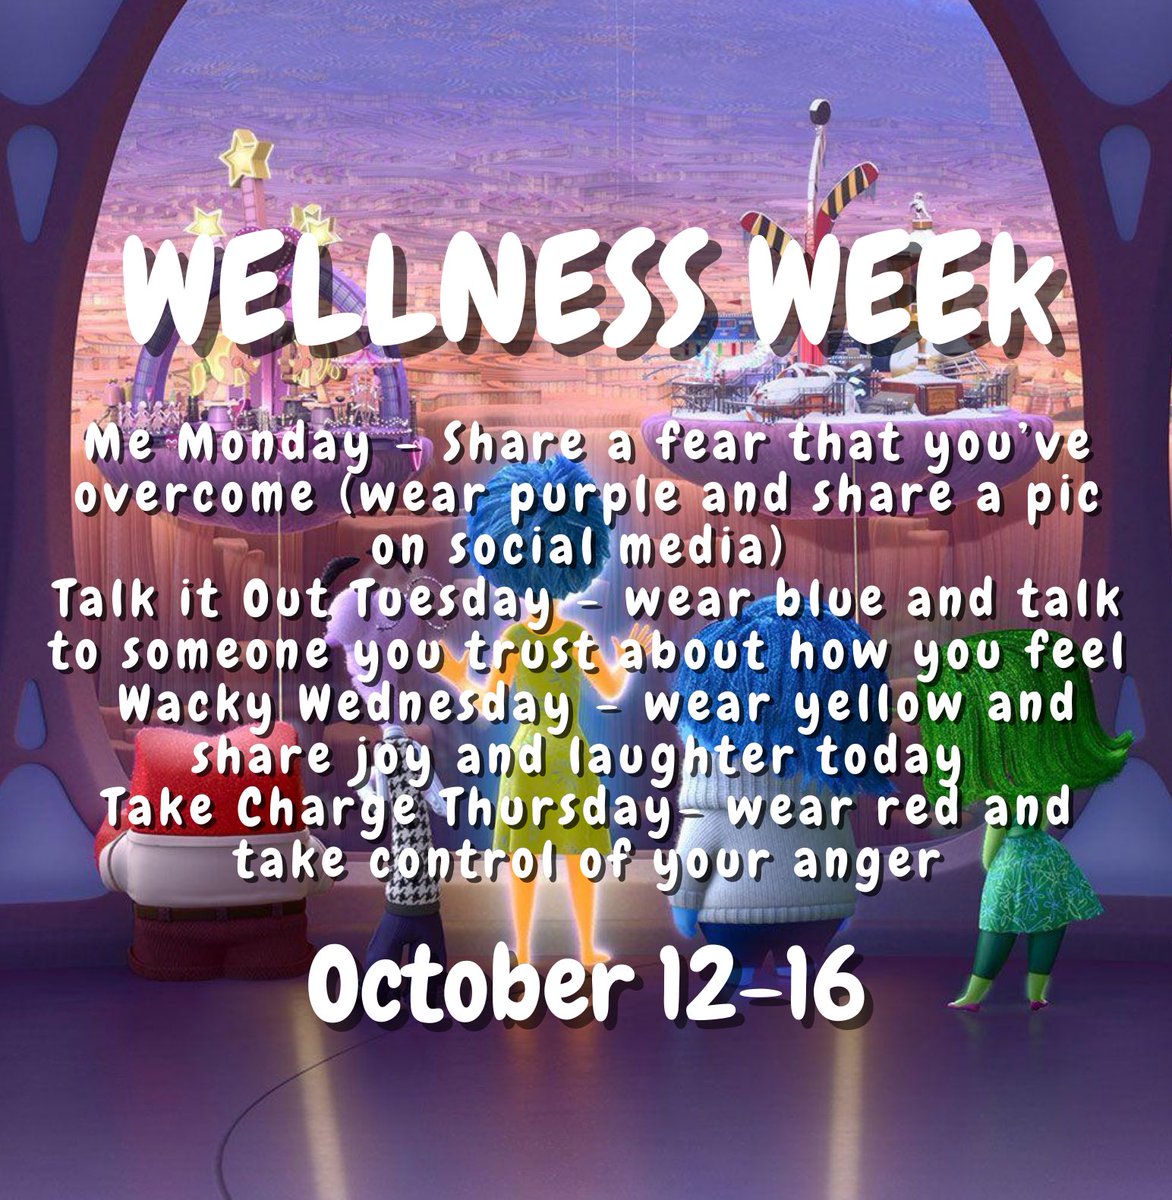 WELLNESS WEEK, NEXT WEEK! OCTOBER 12-16